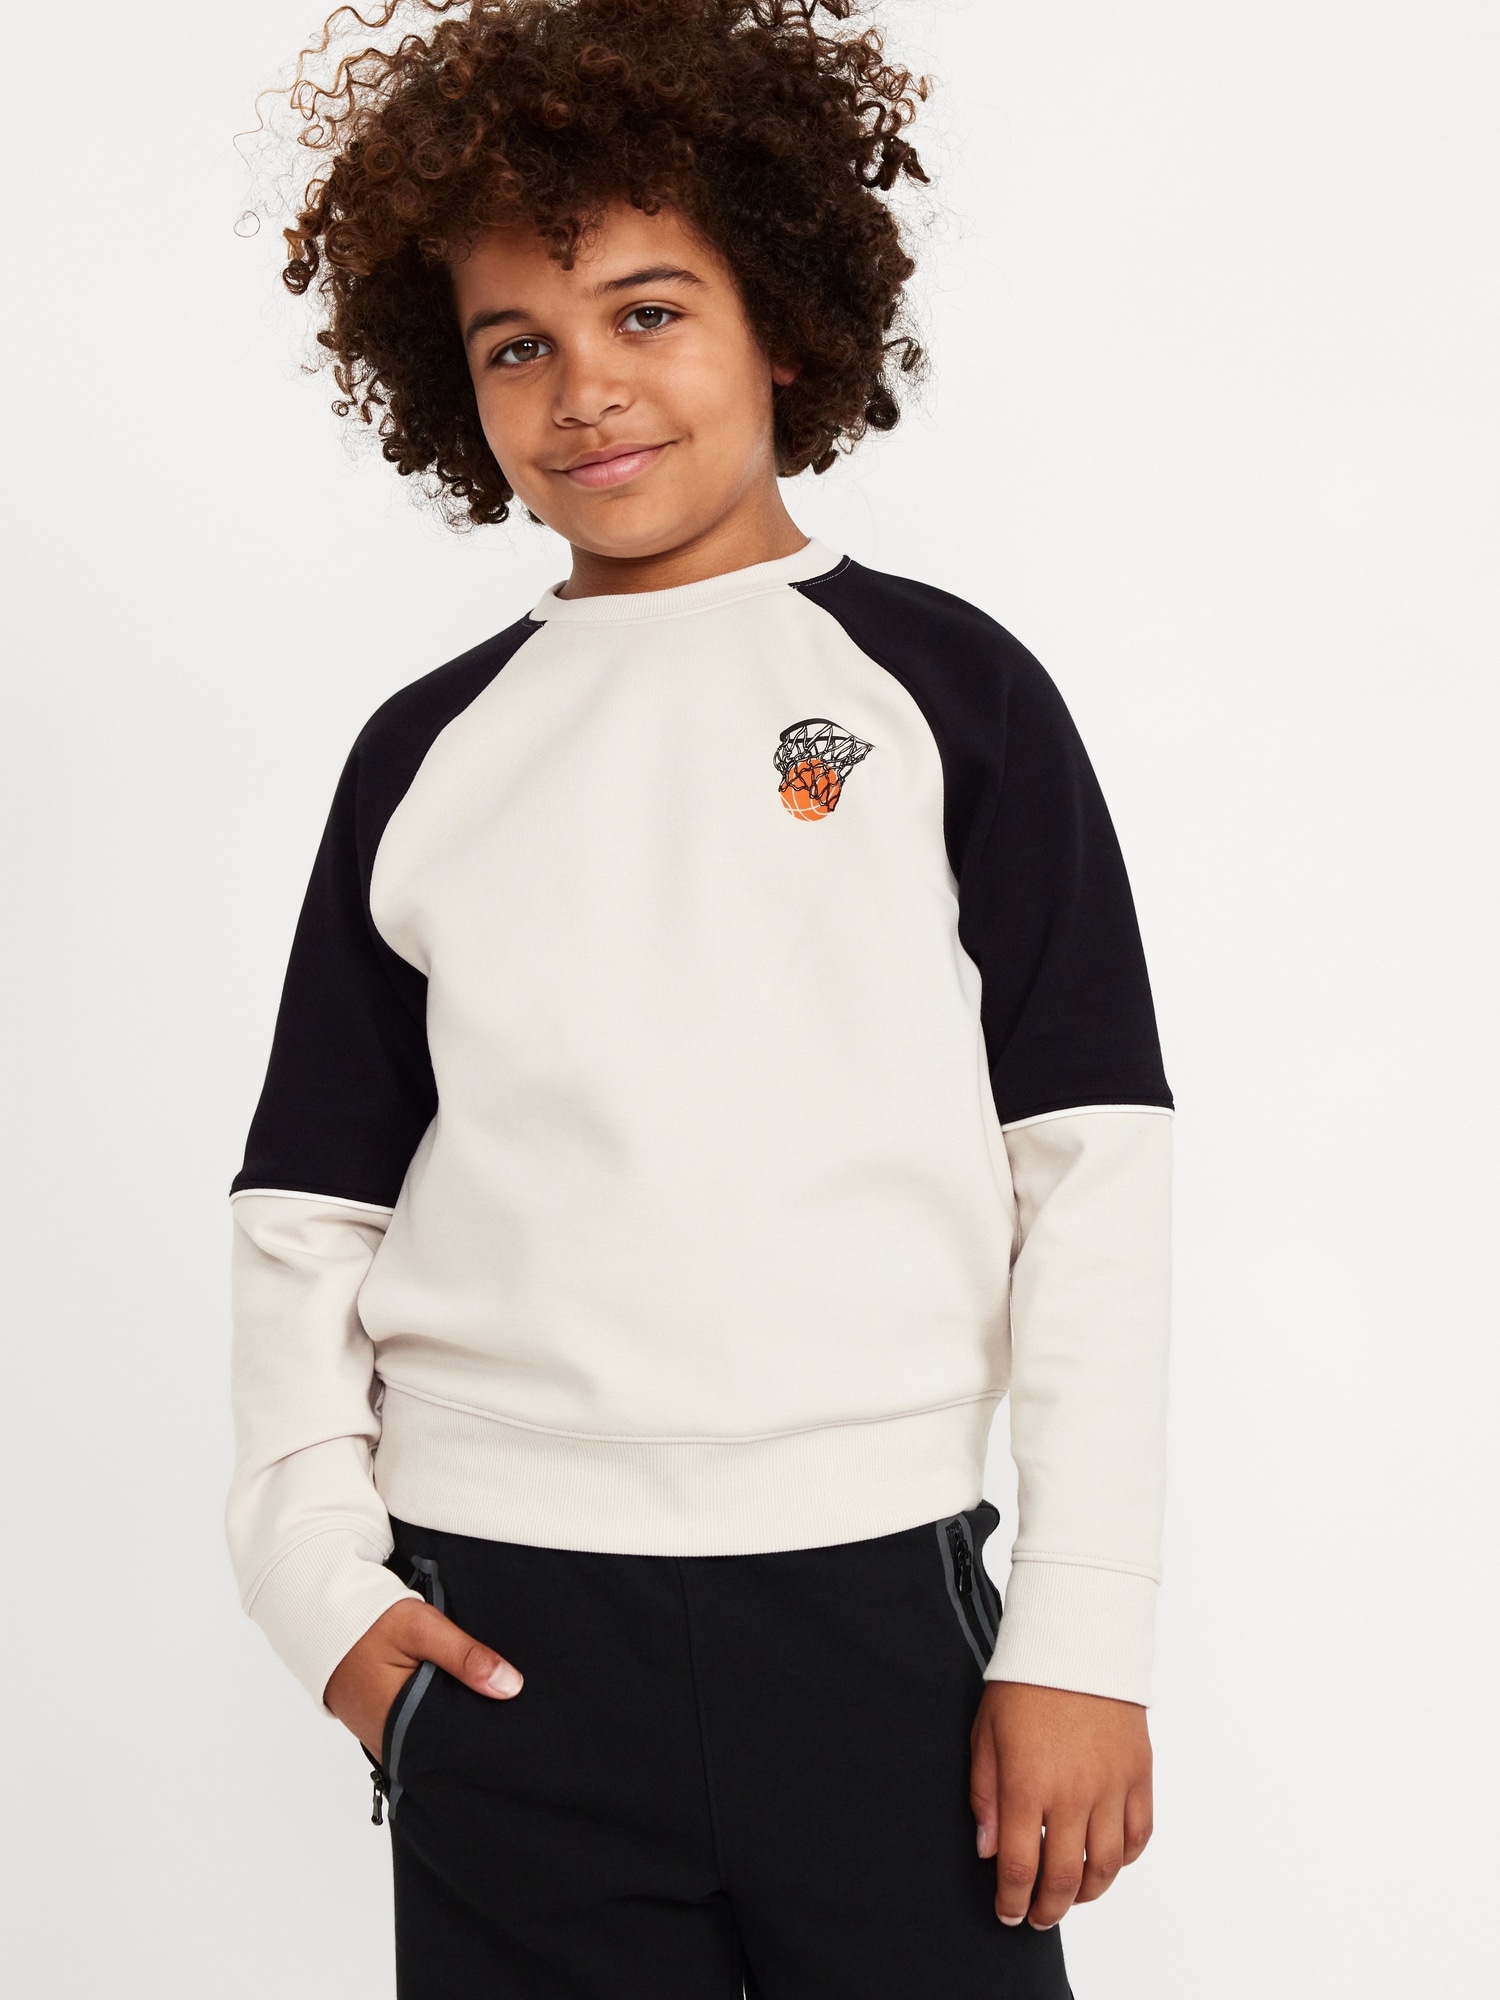 Dynamic Fleece Color Block Graphic Sweatshirt for Boys